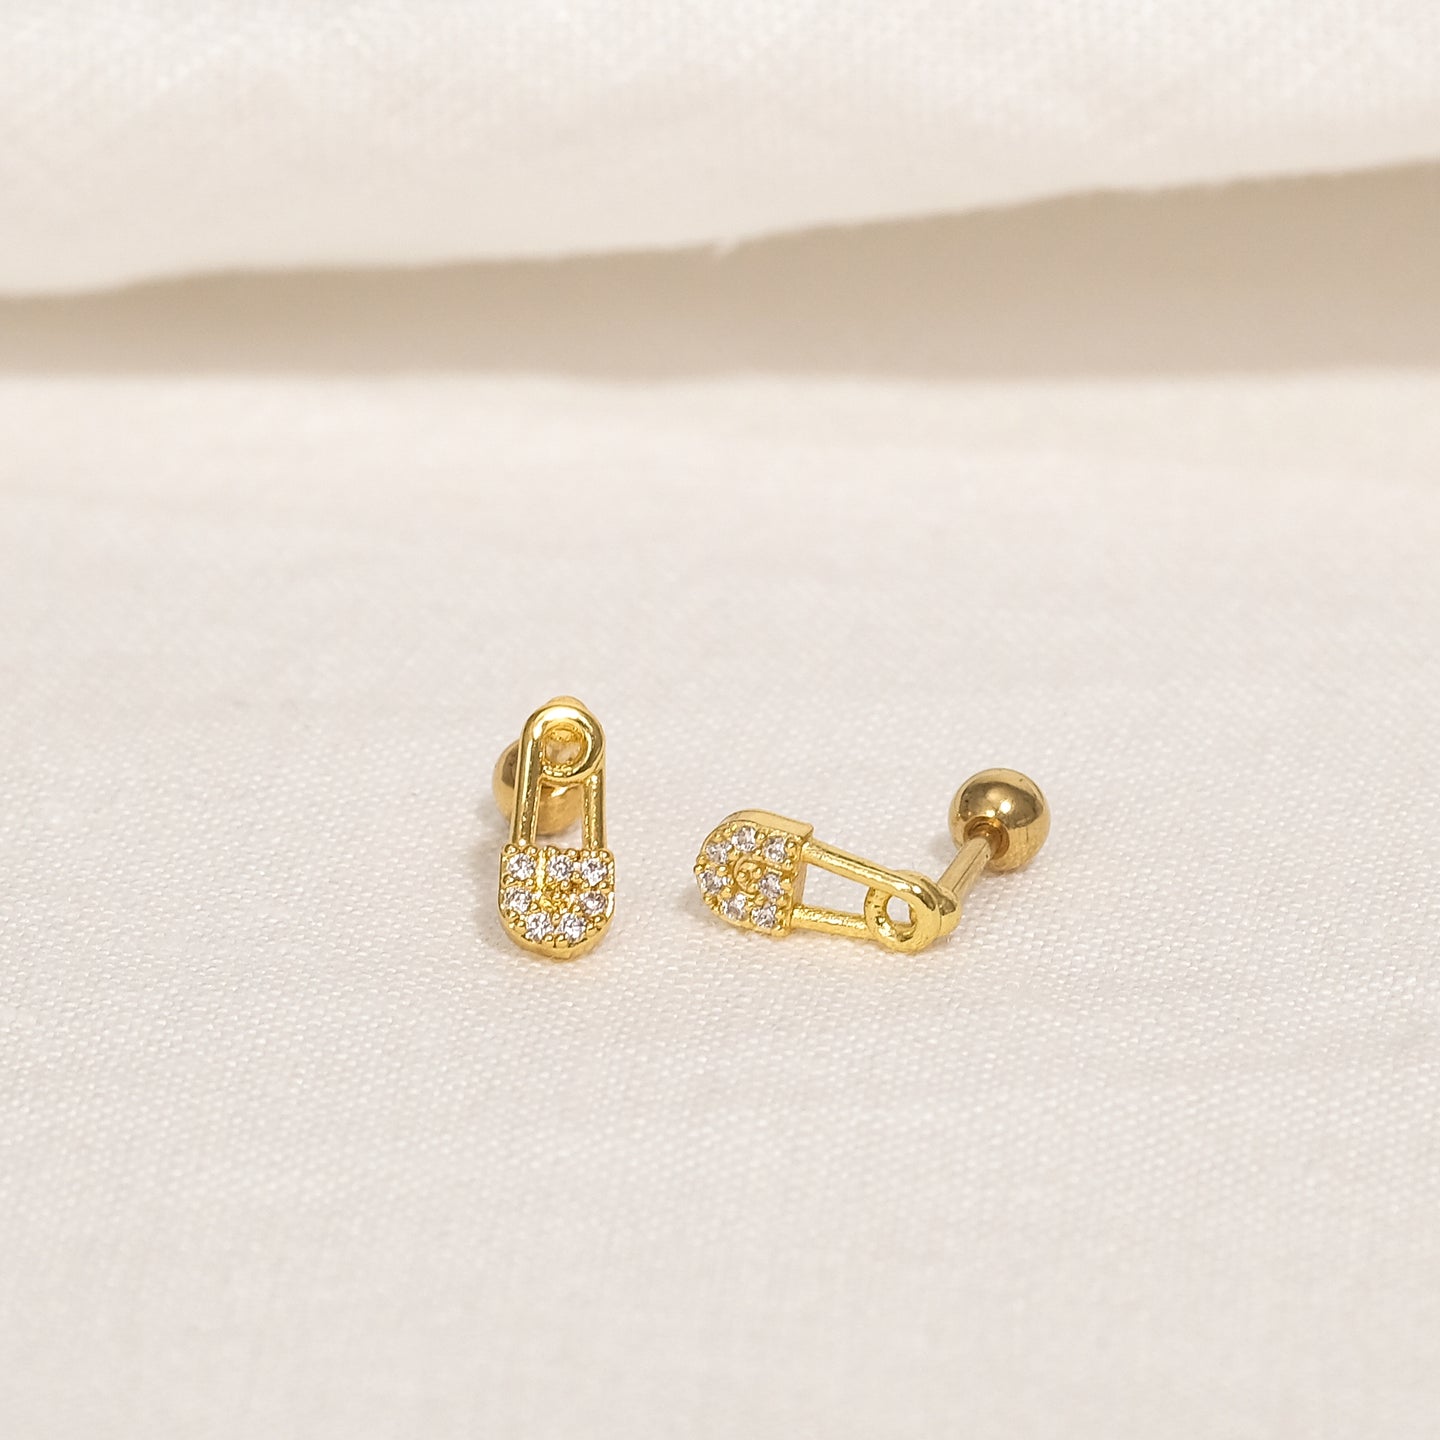 products/josef-cz-stud-earrings-18k-gold-stainless-steel-1.jpg